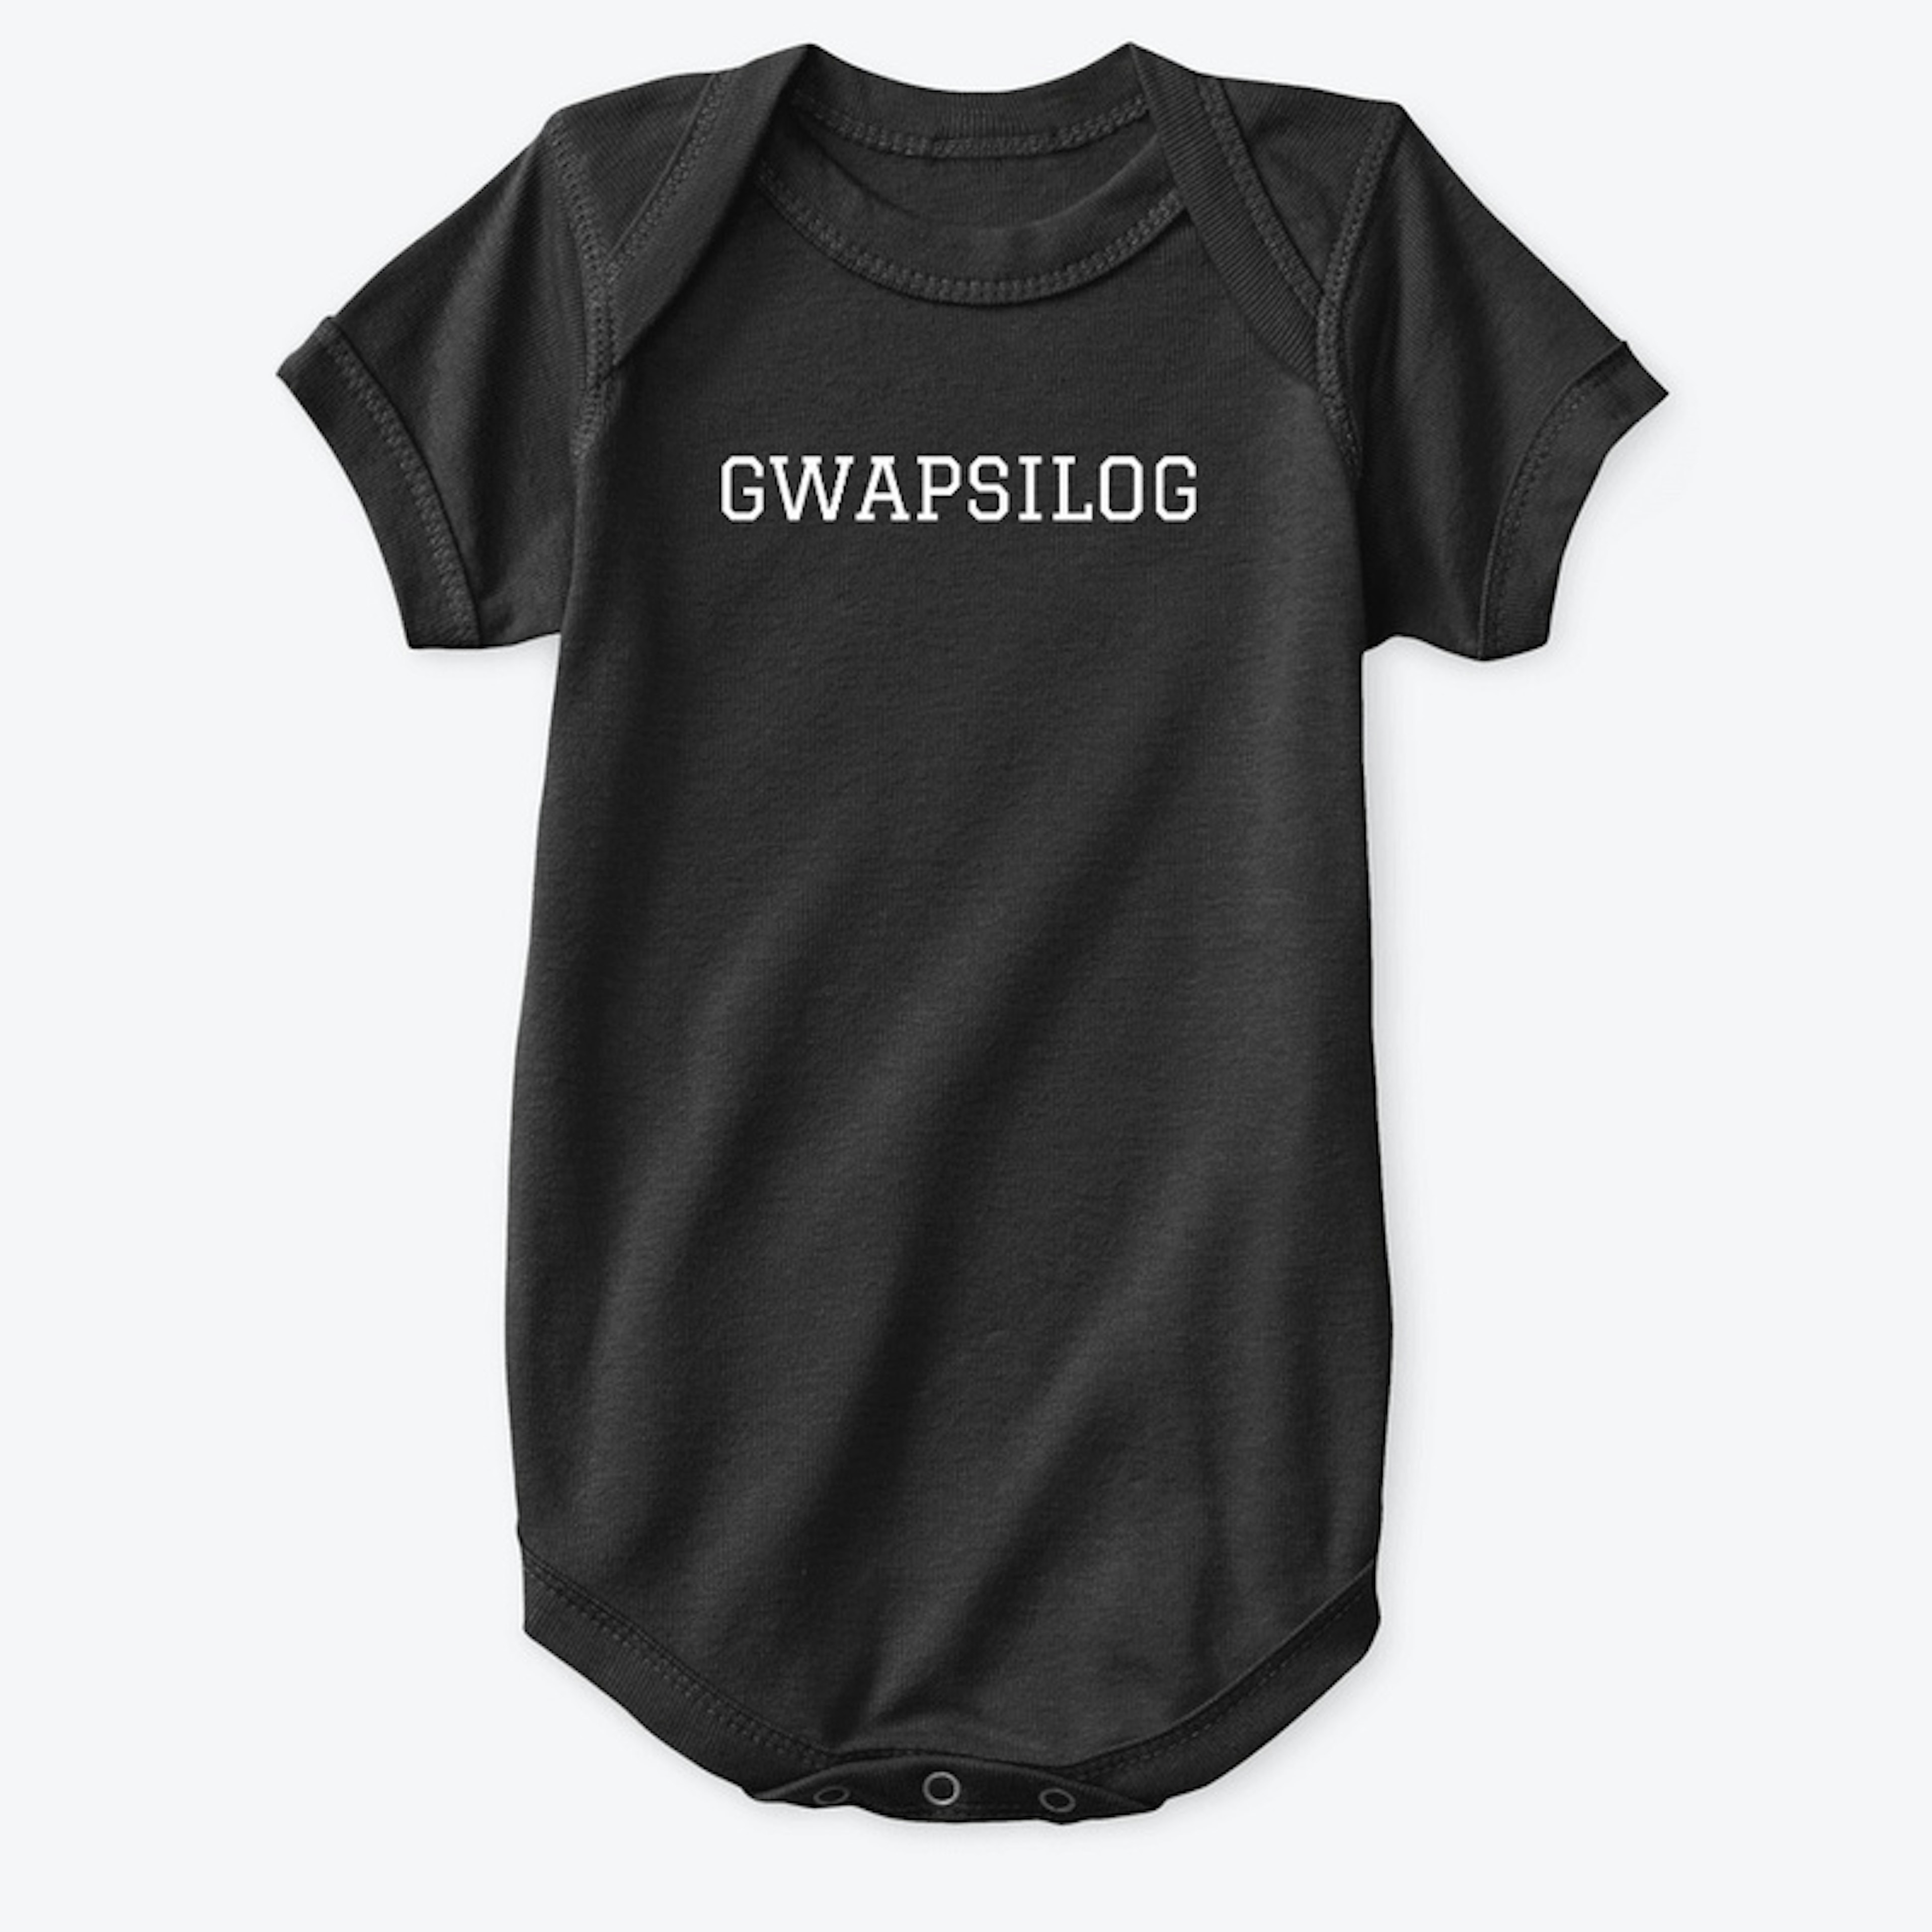 Gwapsilog Baby